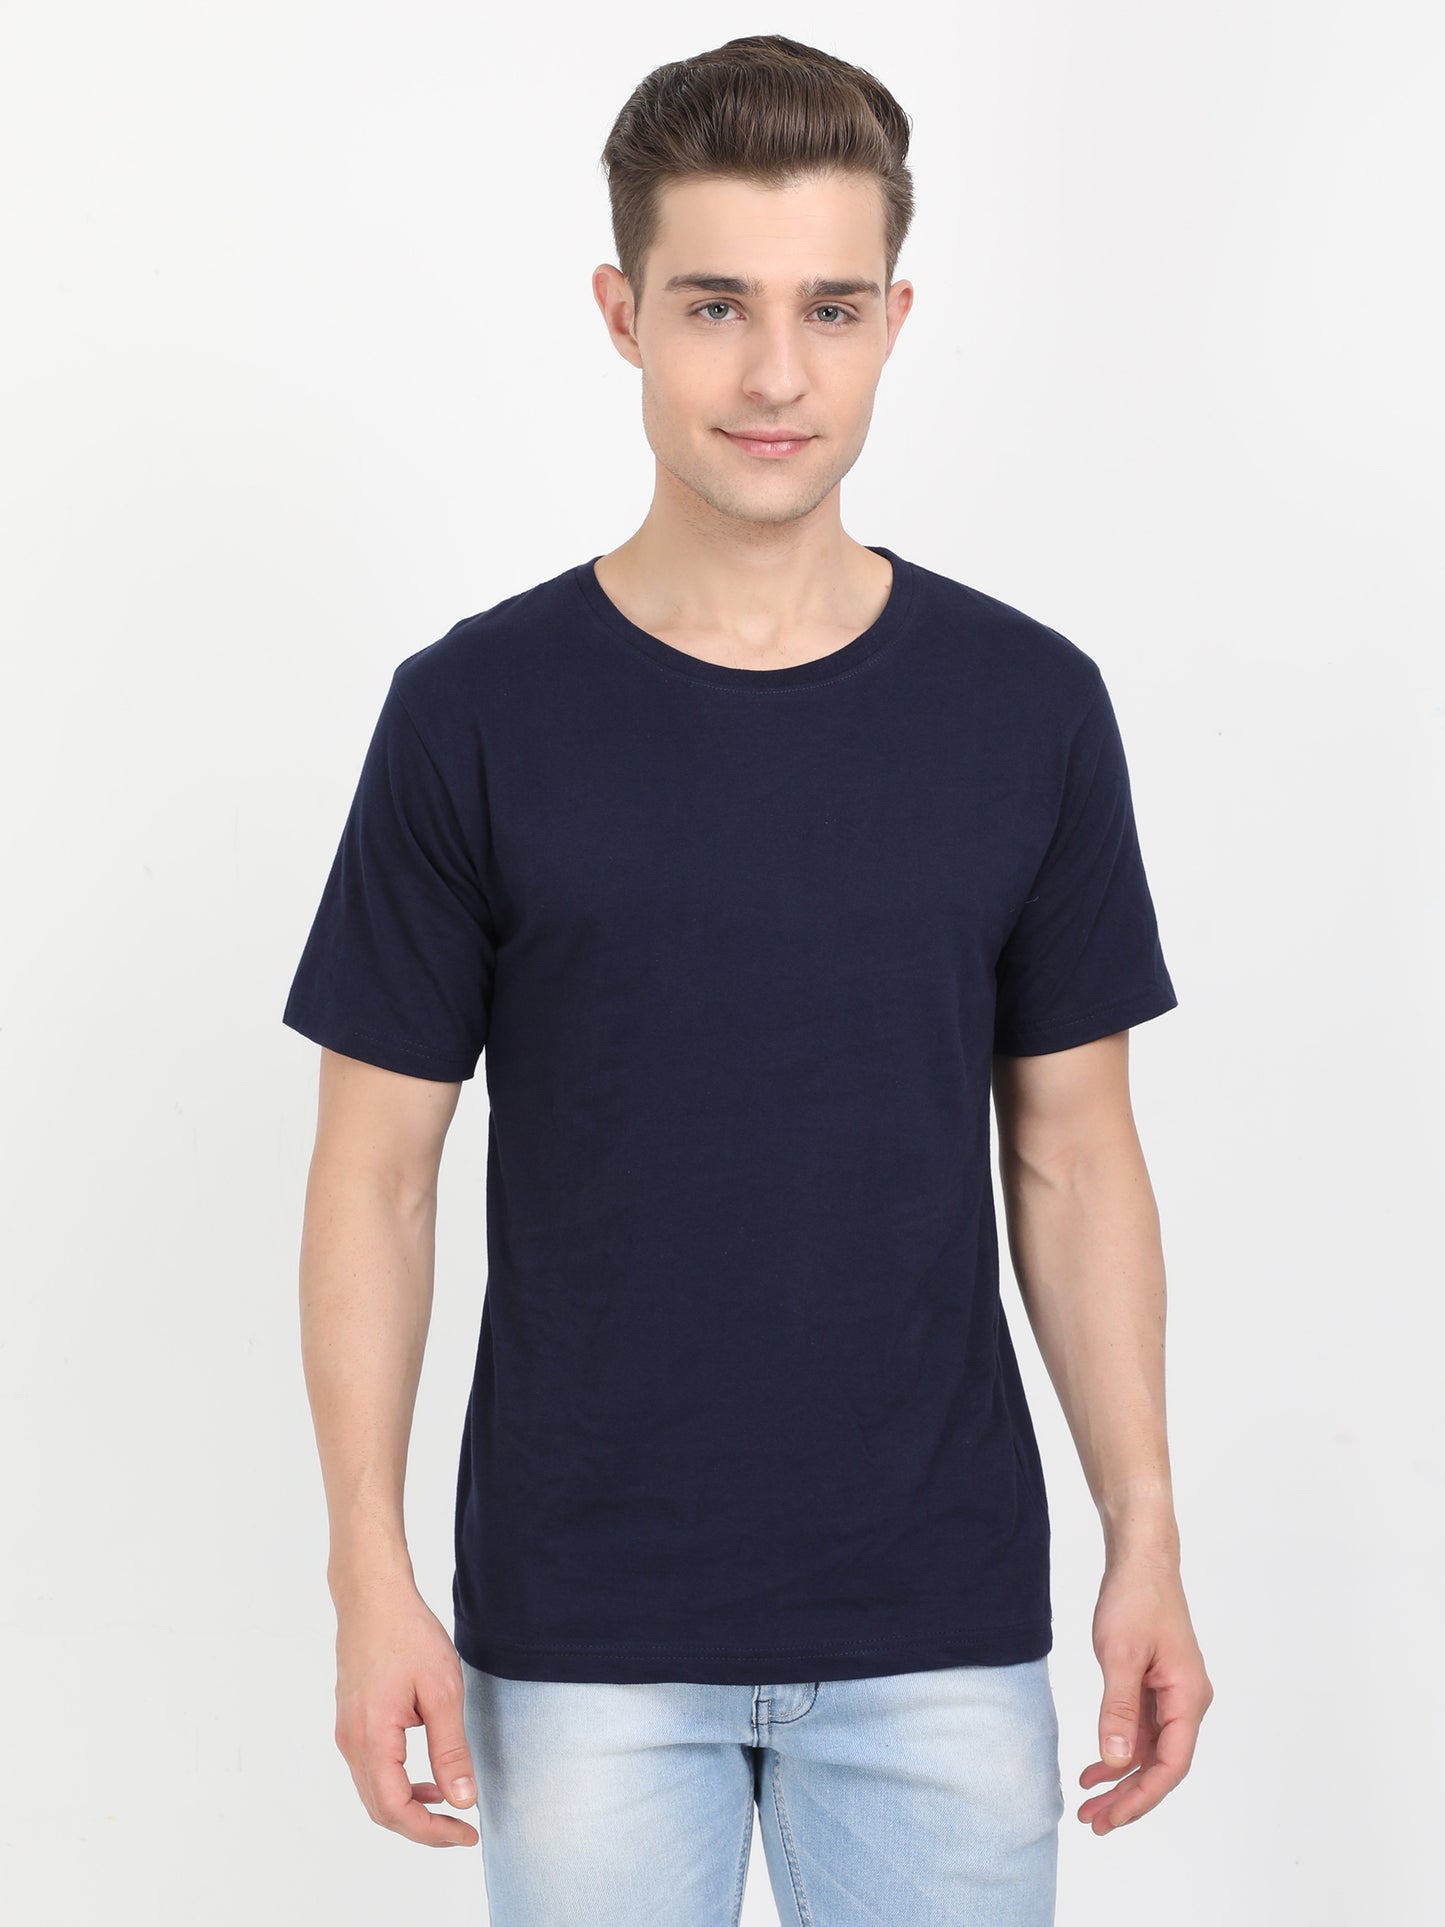 Men's Cotton Plain Round Neck Half Sleeve T-Shirt (Pack of 2)